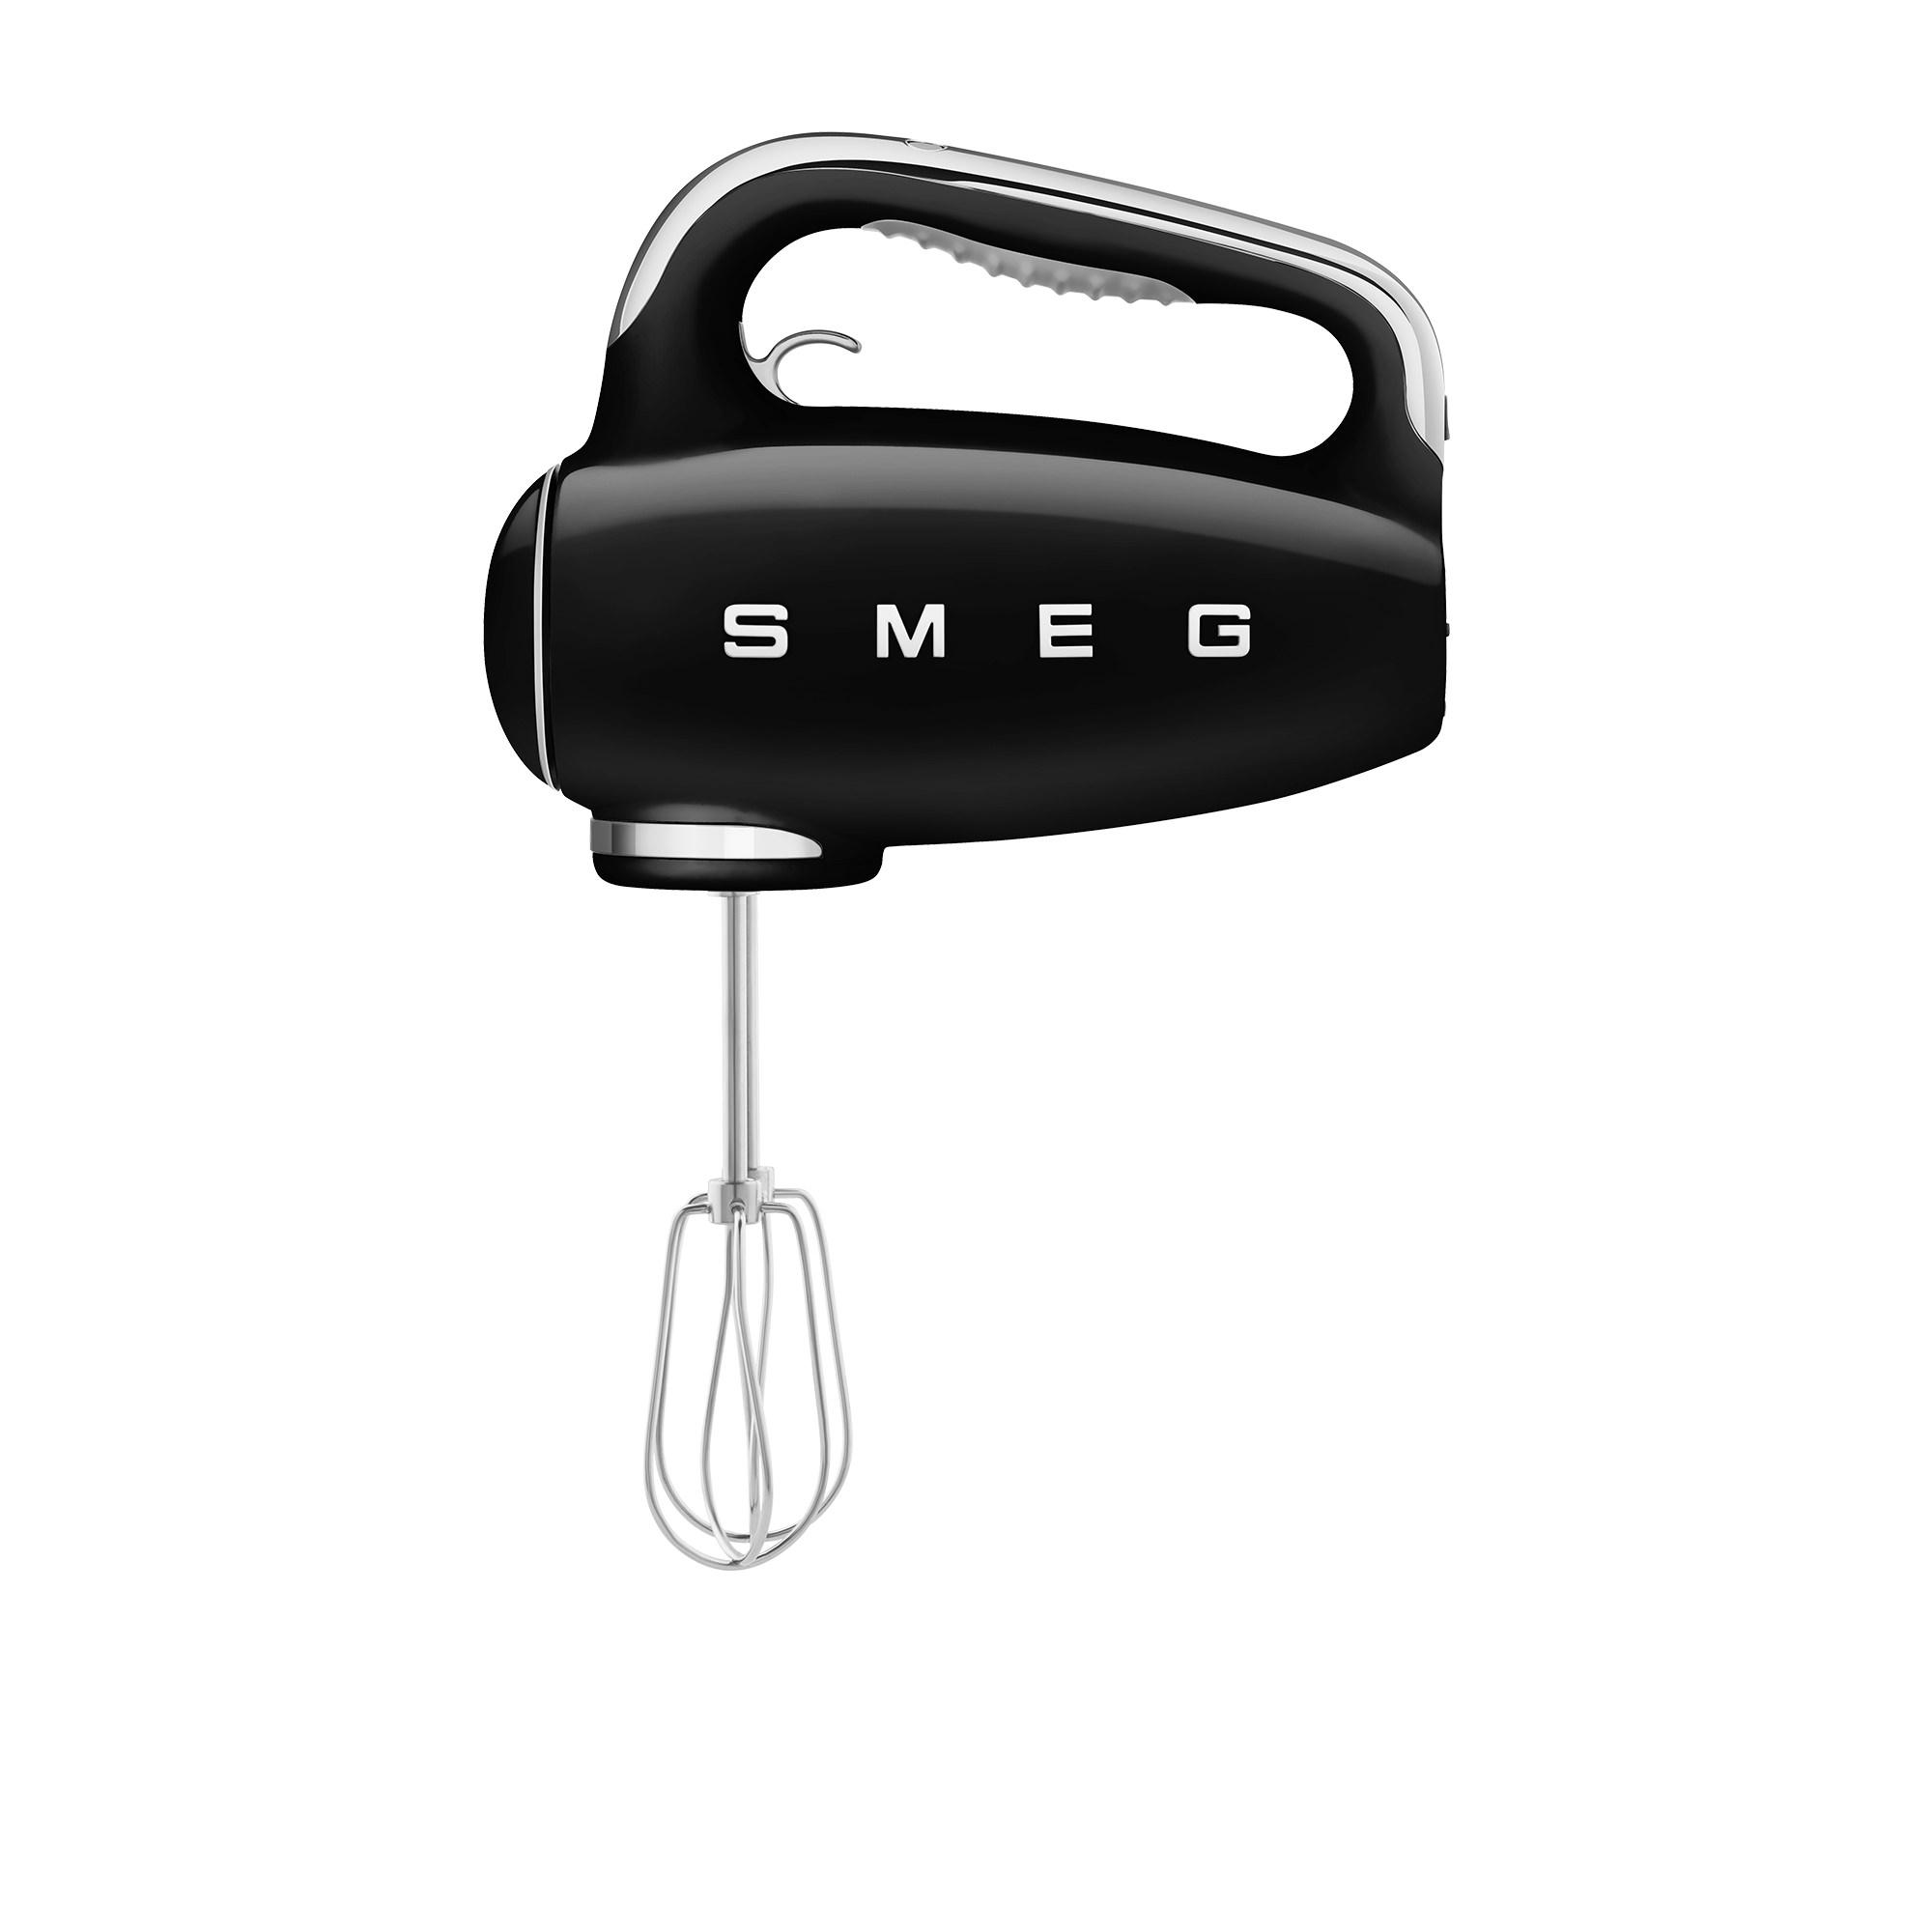 Smeg 50's Retro Style Digital Hand Mixer Black Image 1